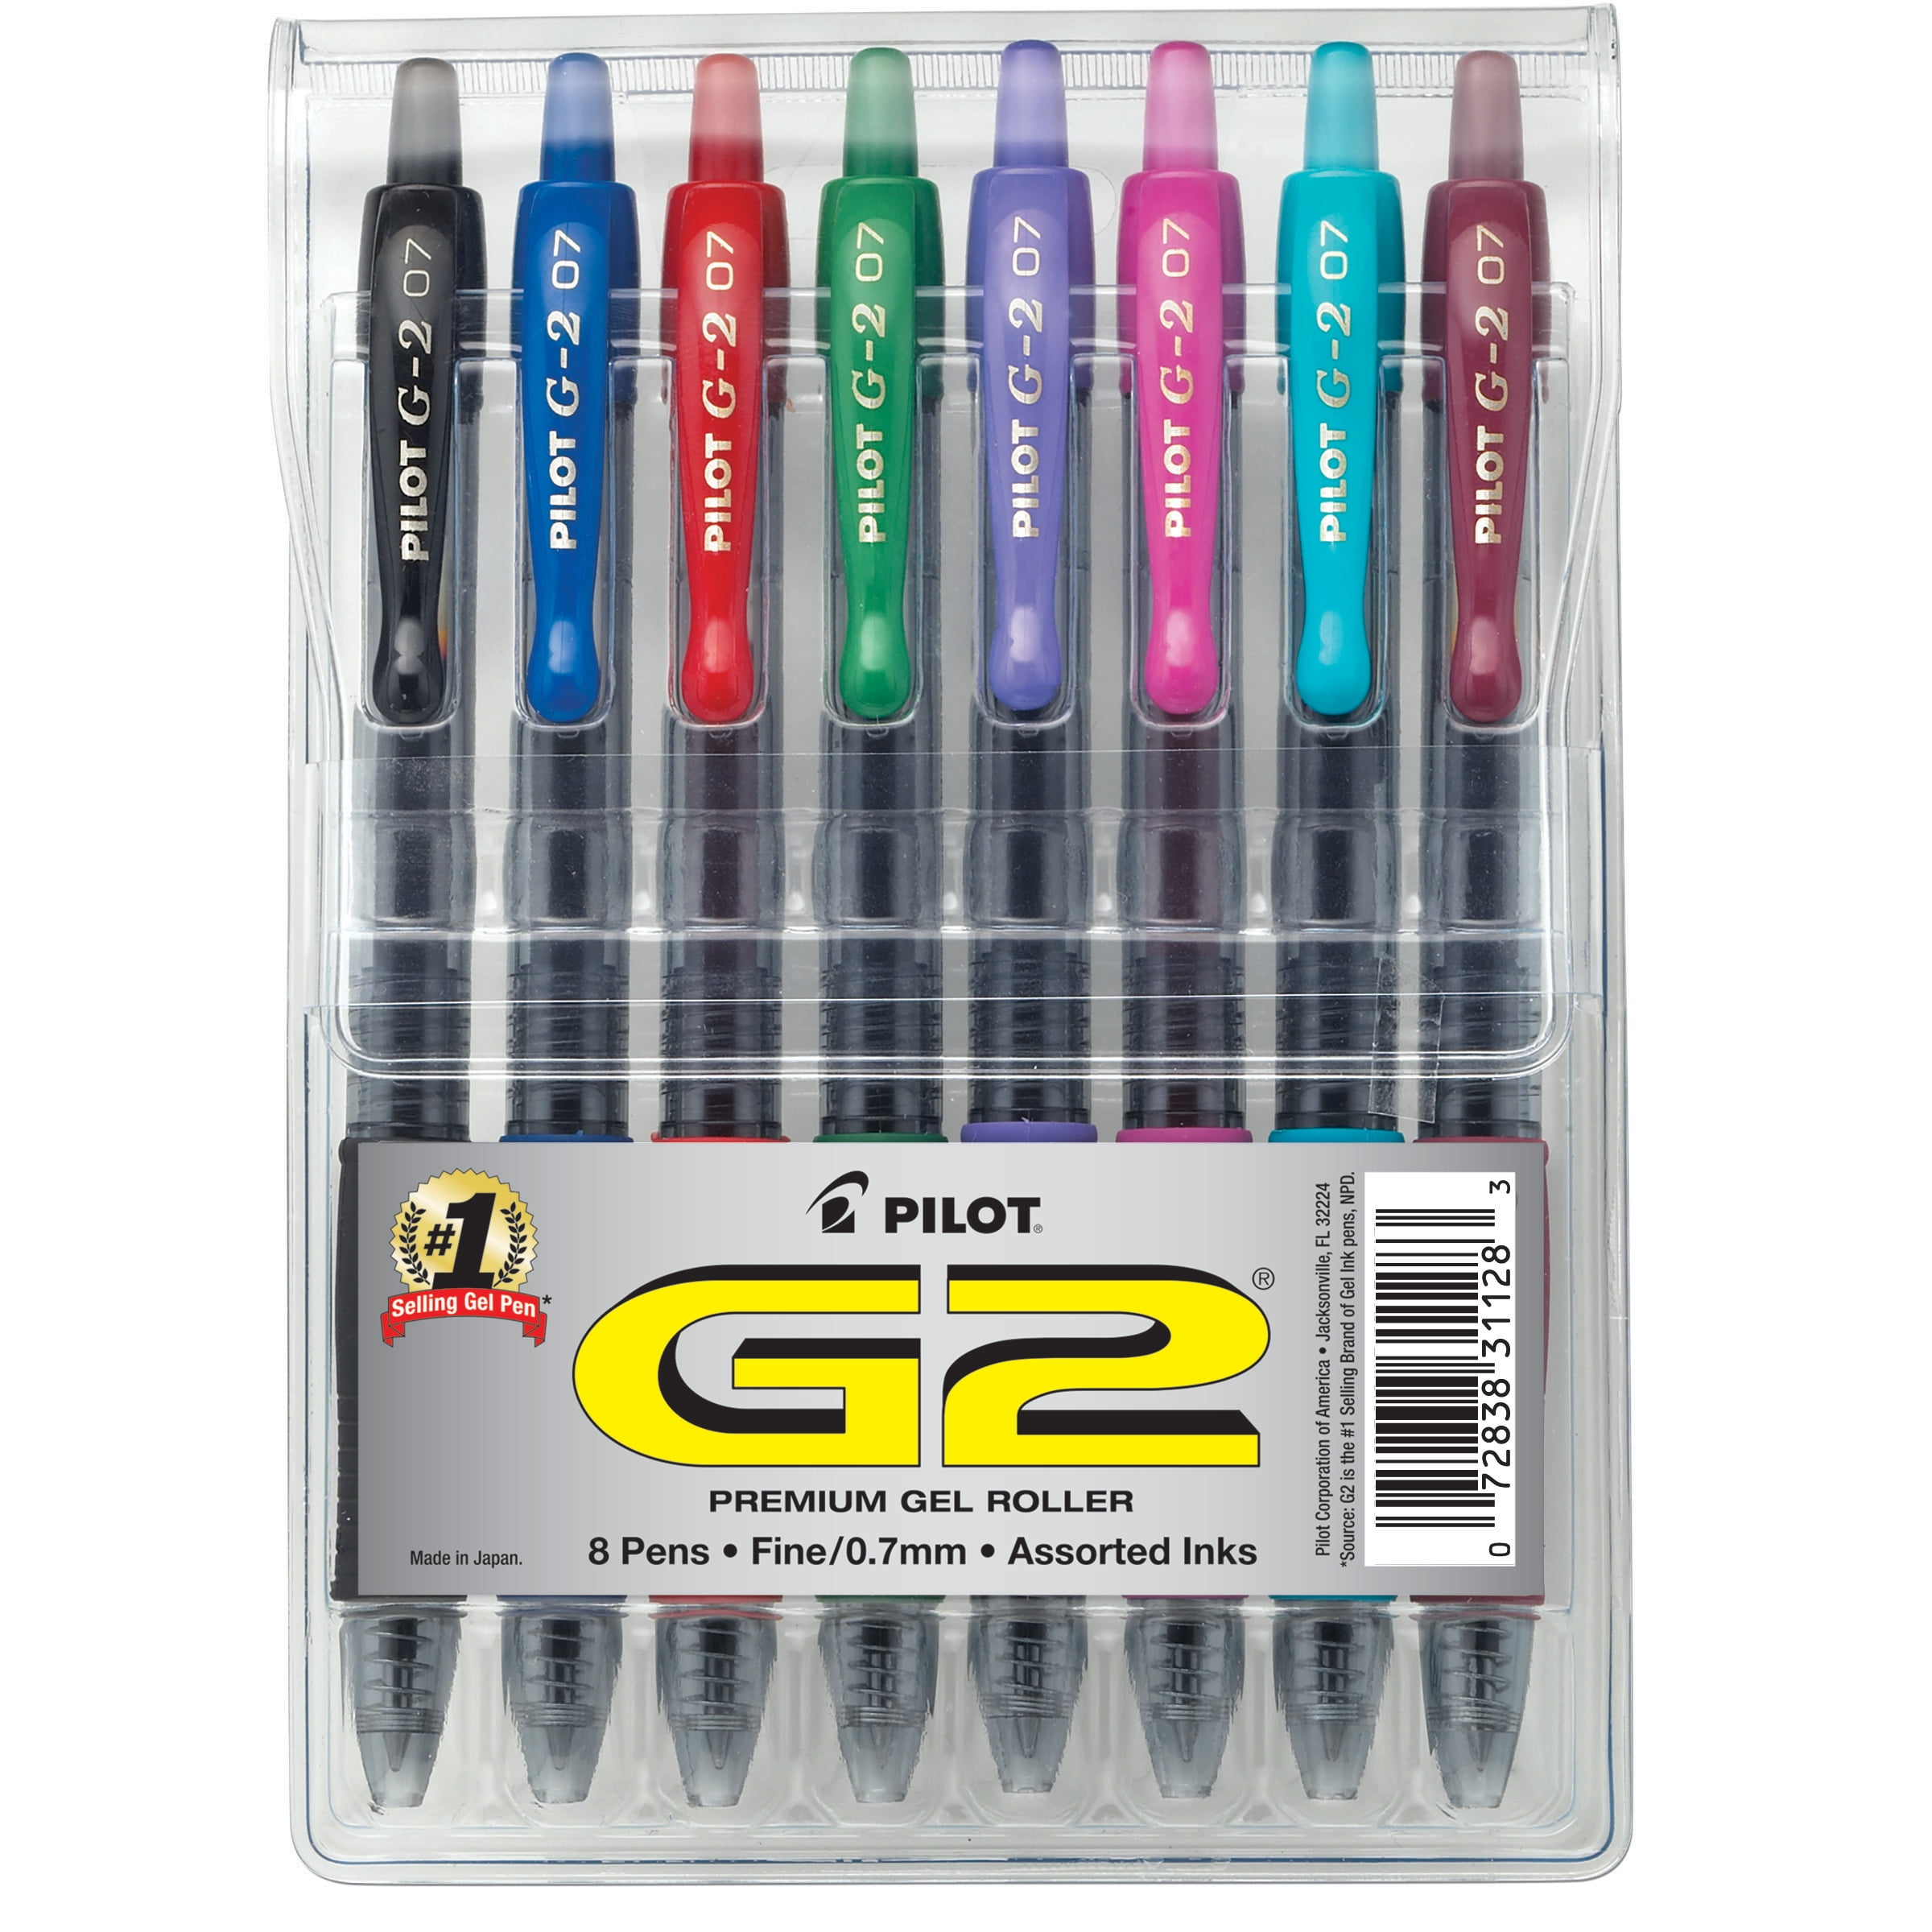 6 Count Pilot G2 Premium Retractable Gel Roller Ball Pens 0.7 mm Fine Point 